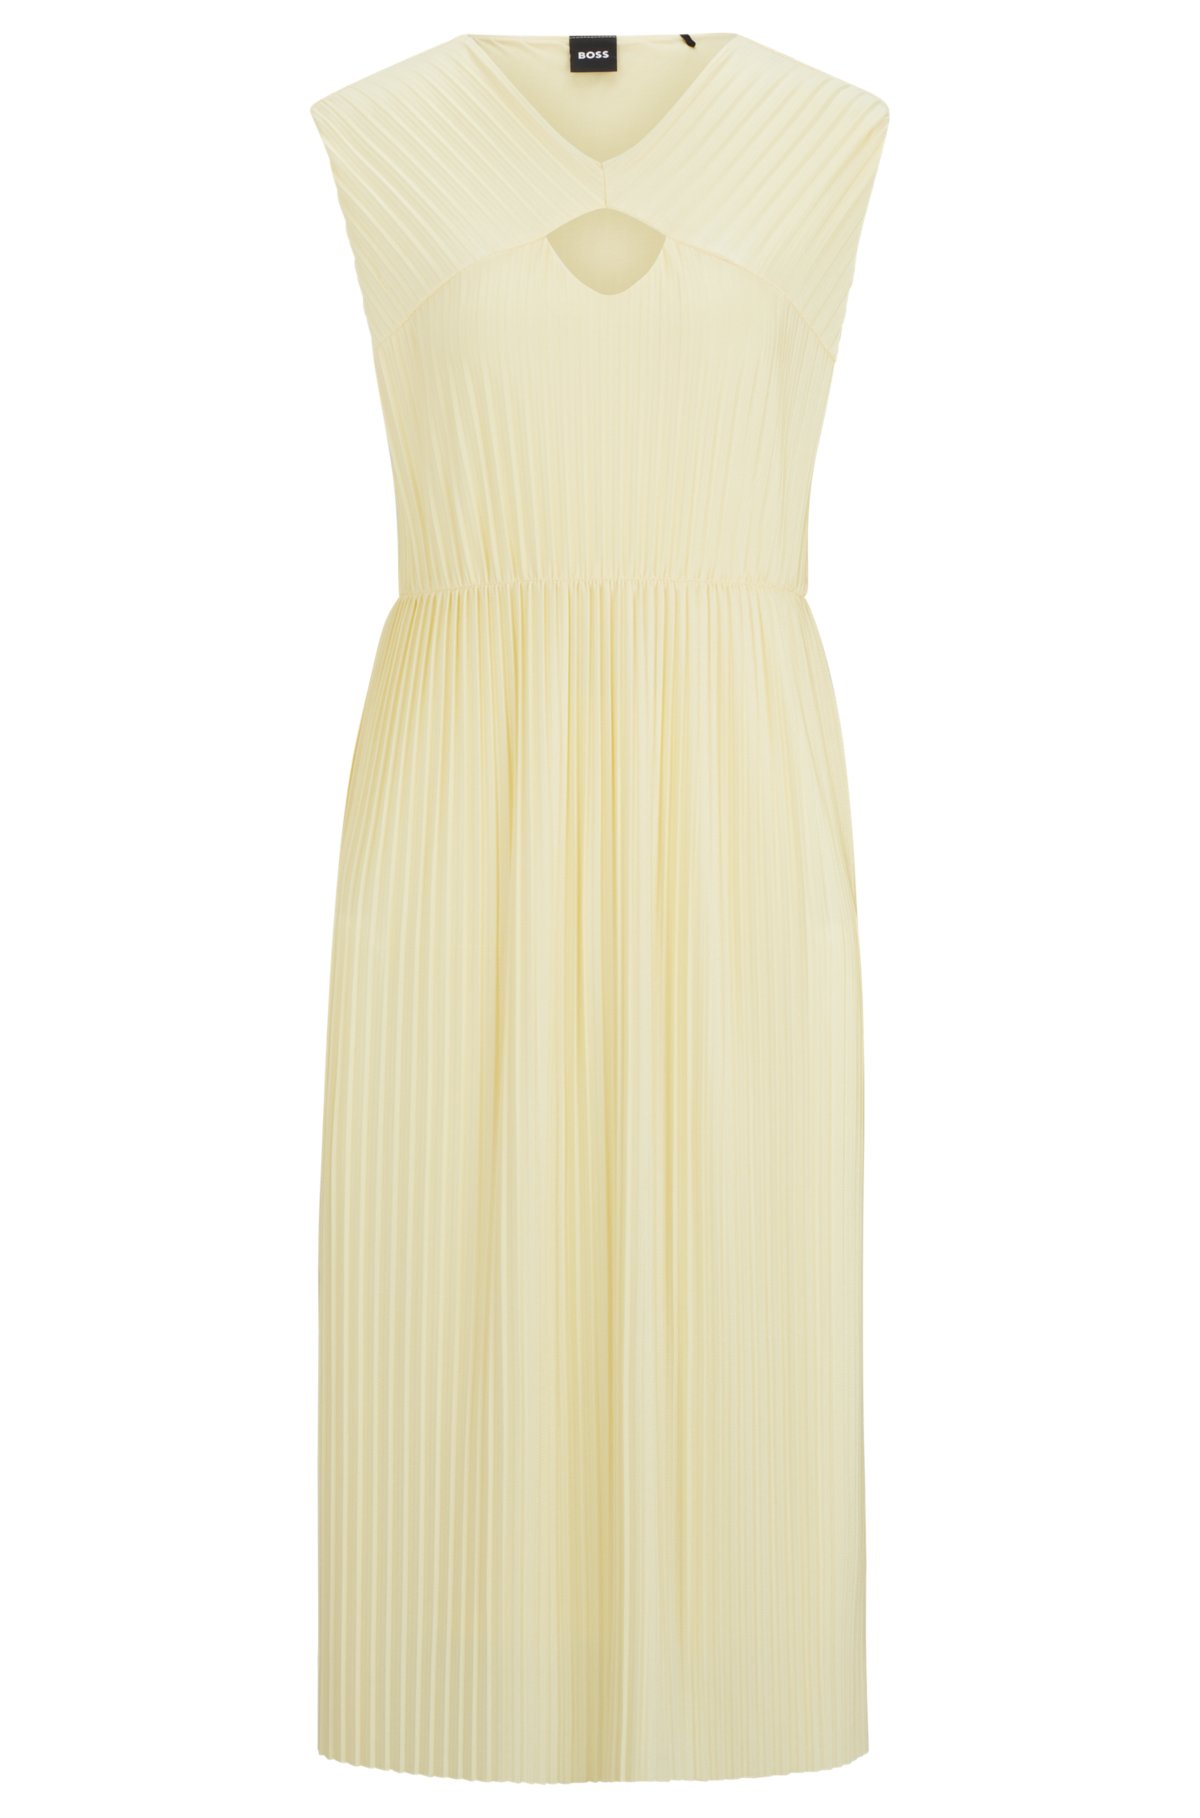 Sleeveless dress in high-shine plissé fabric, Light Yellow